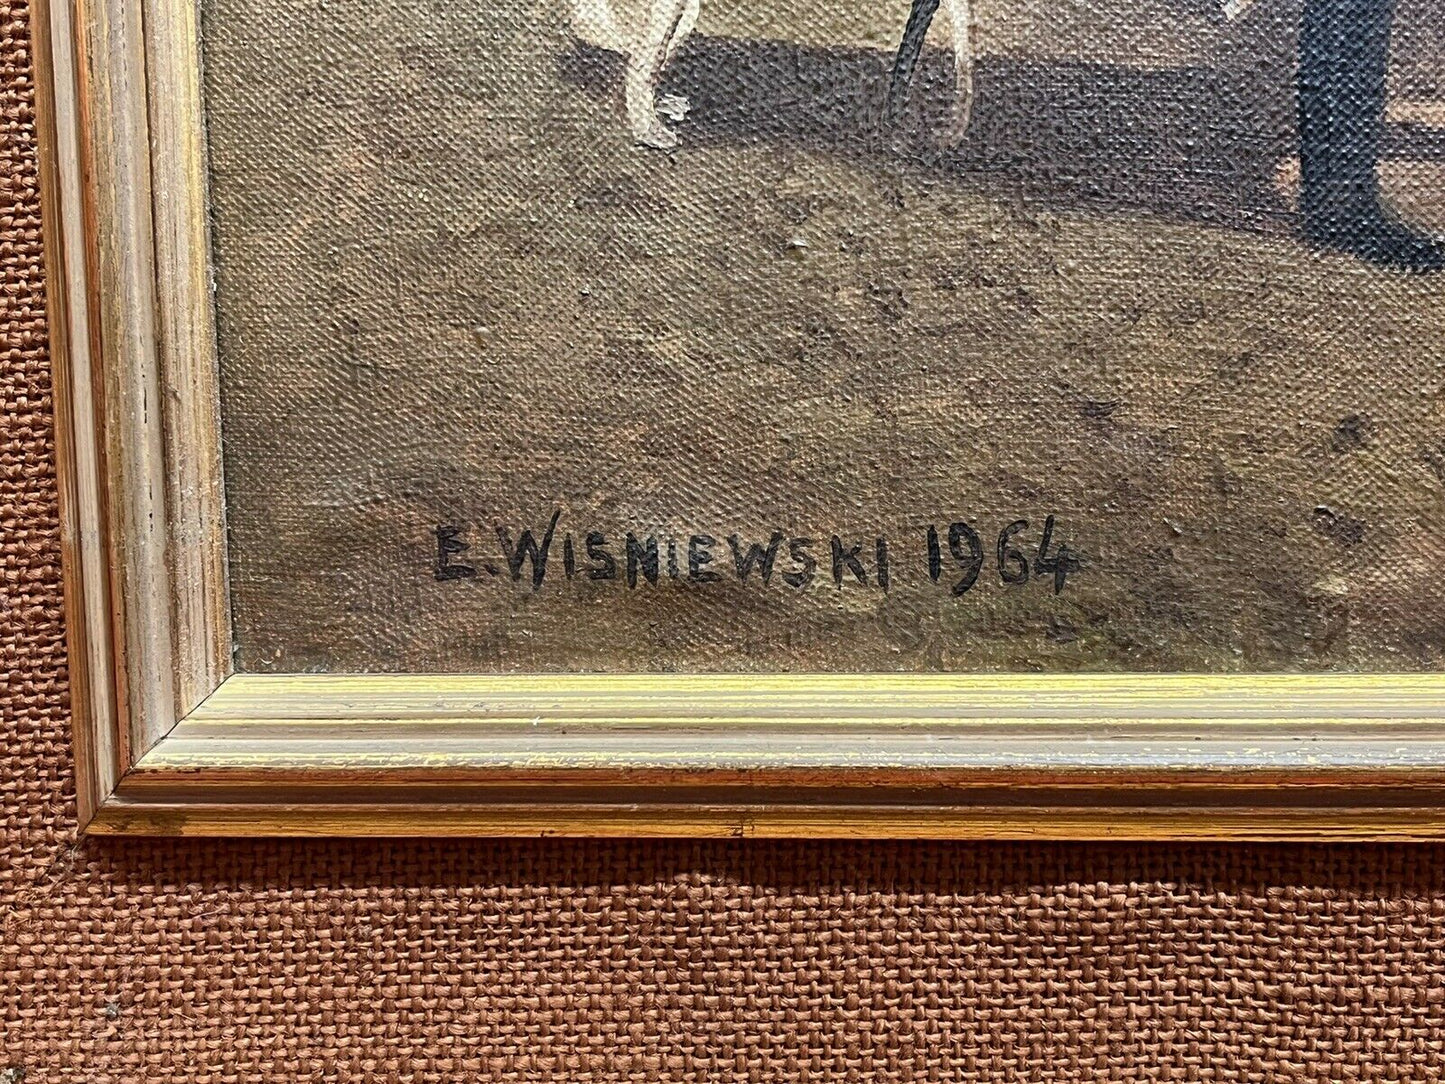 Signed Oil On Canvas By E .Wisniewski 1964